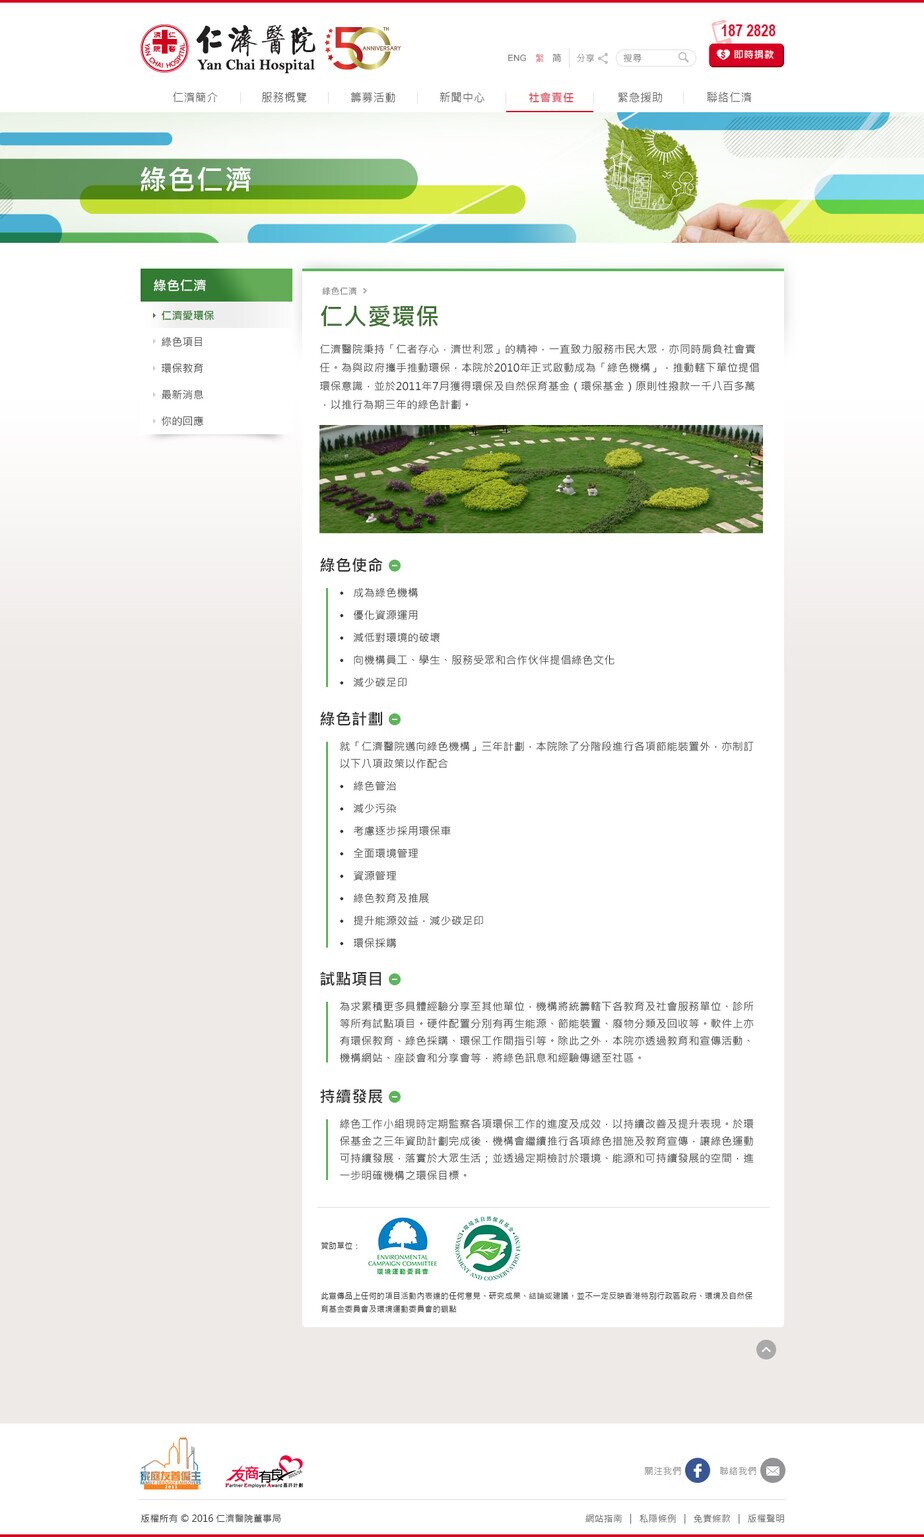 Yan Chai Hospital website screenshot for desktop version 5 of 5